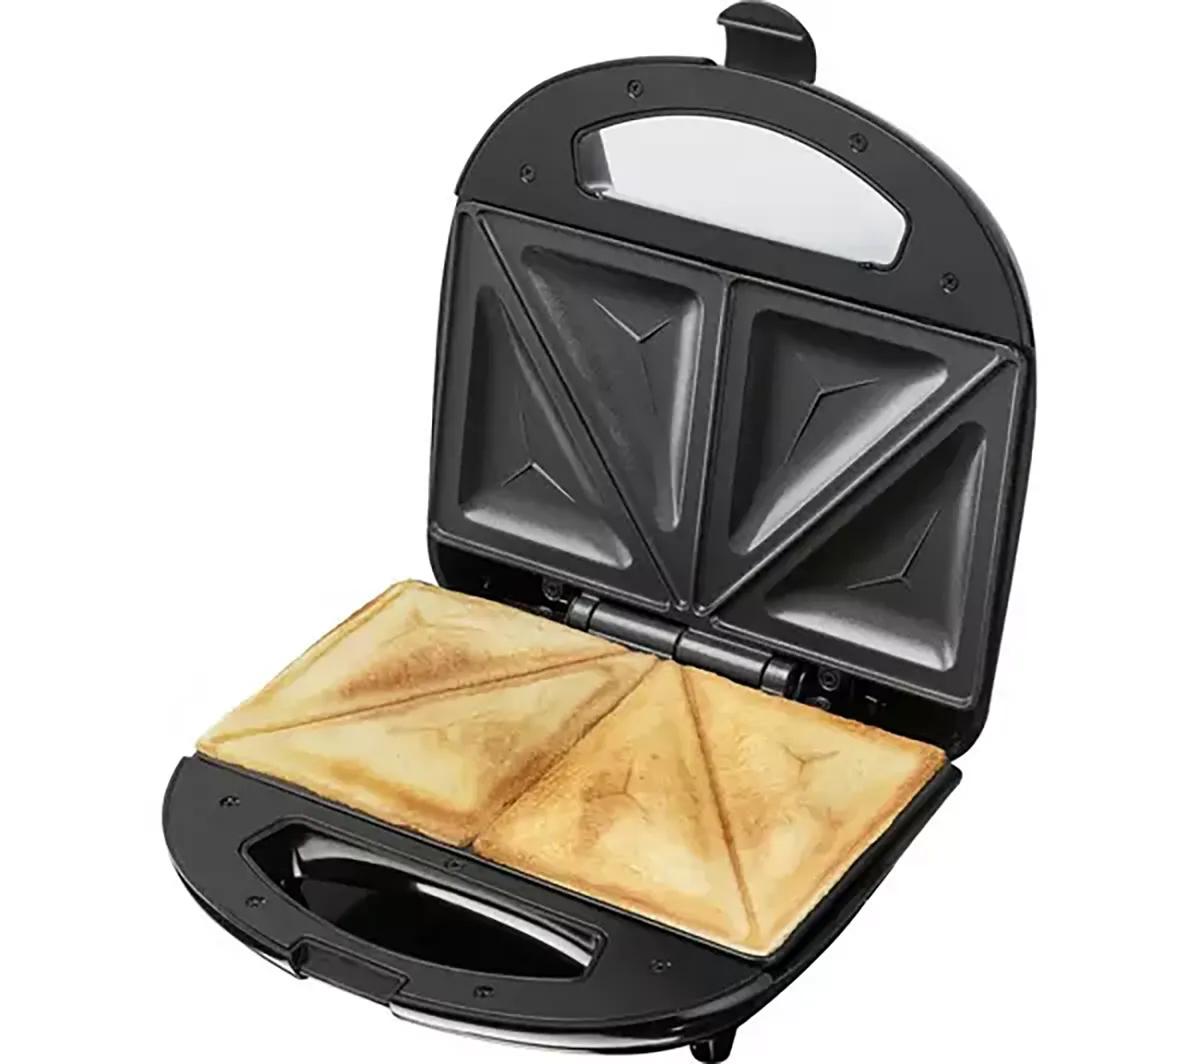 Logik sandwich toastie maker